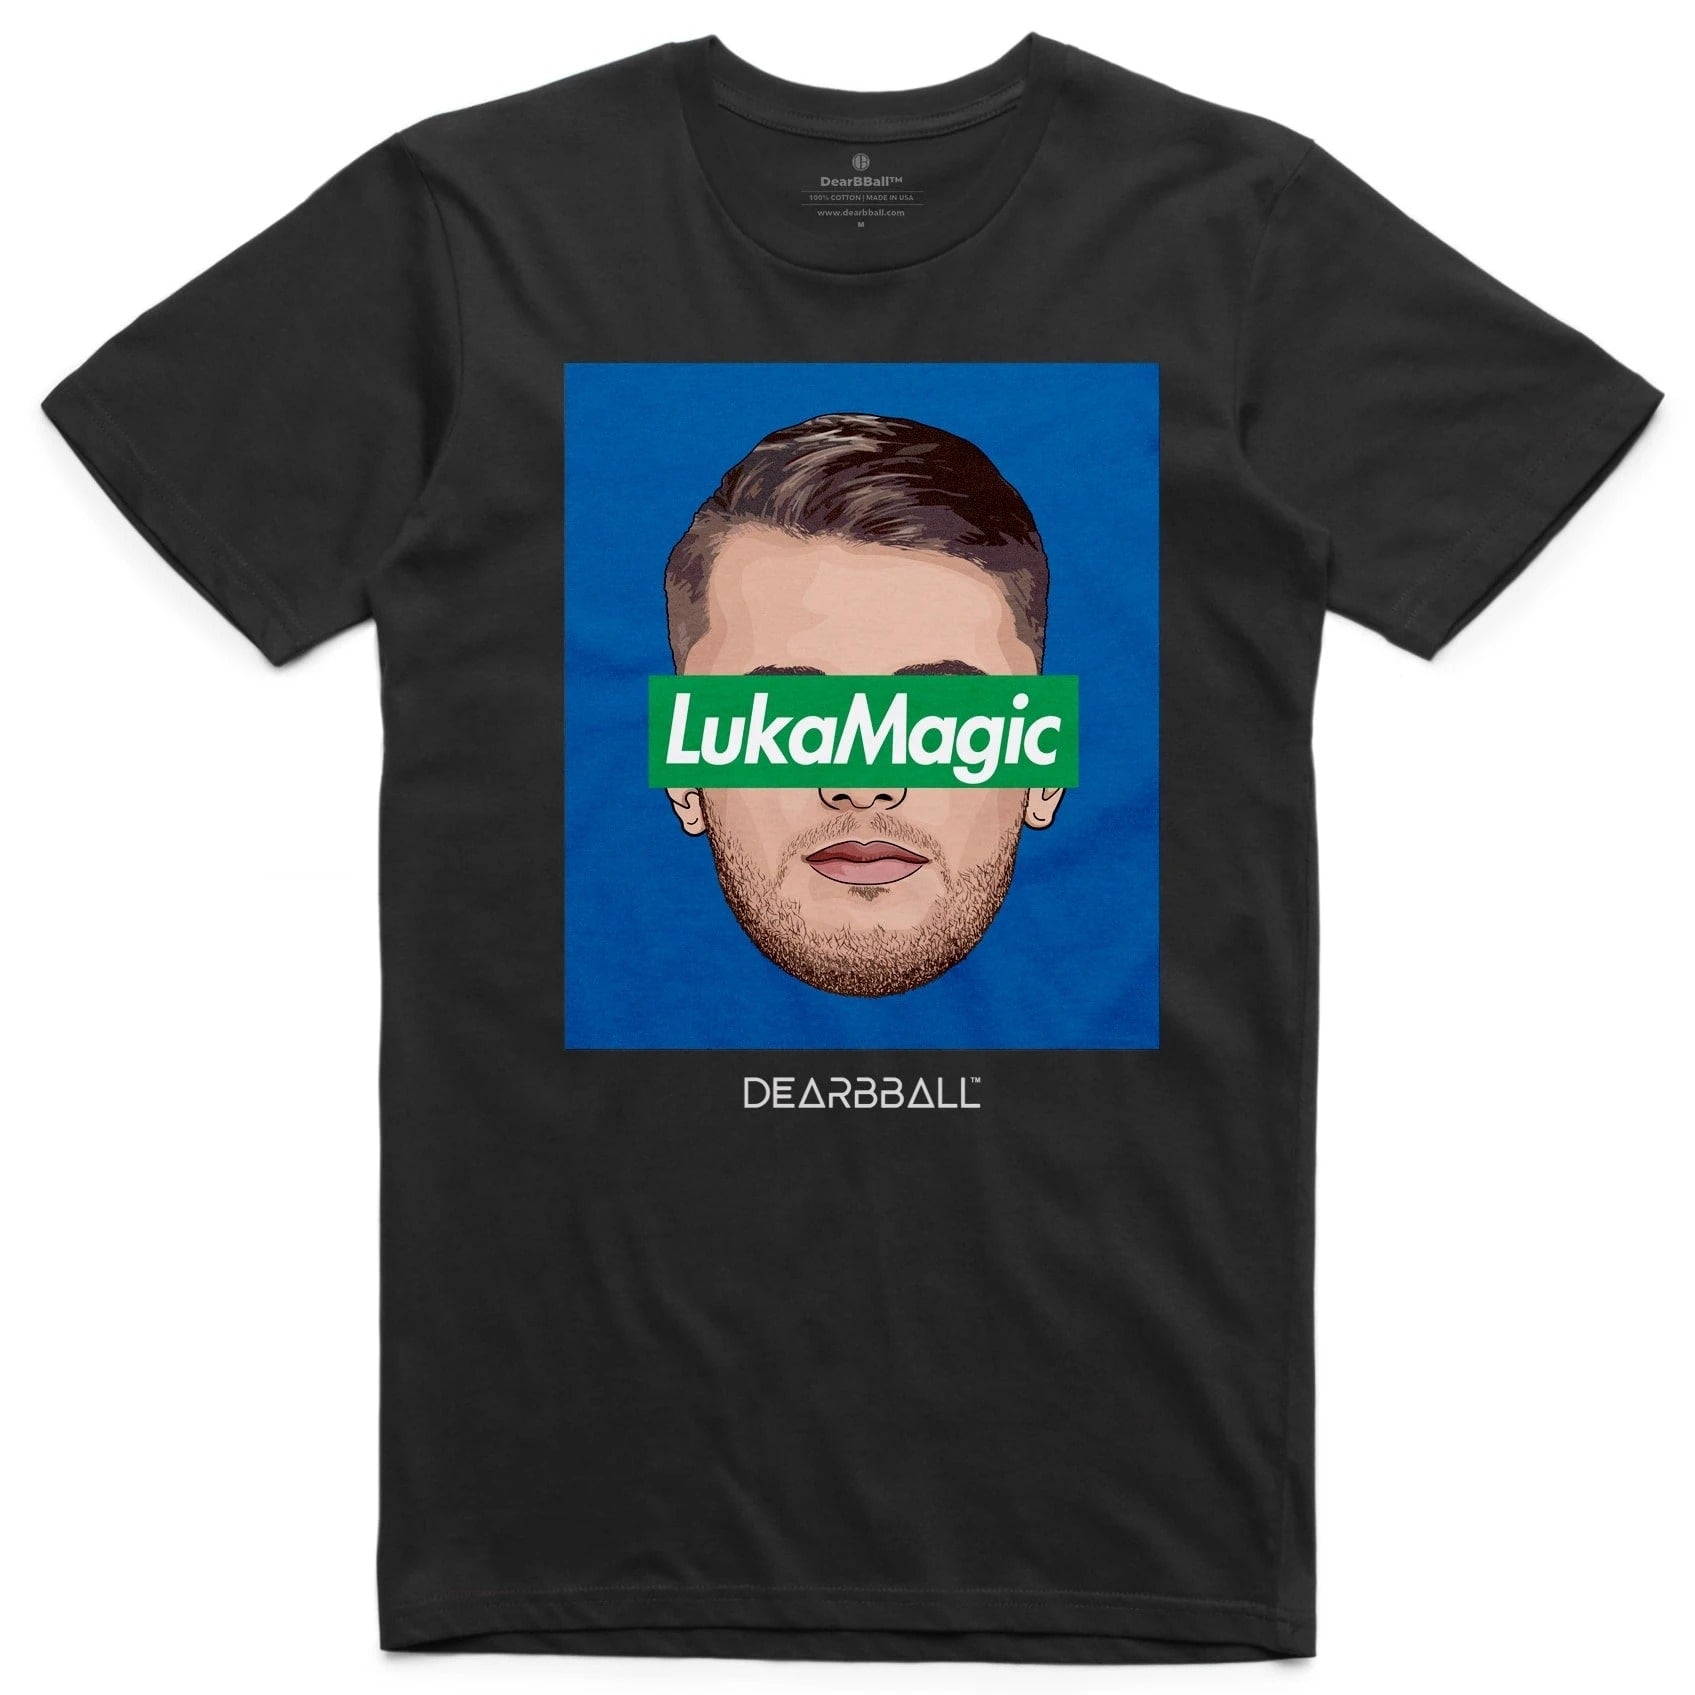 [ENFANT] DearBBall T-Shirt - LukaMagic